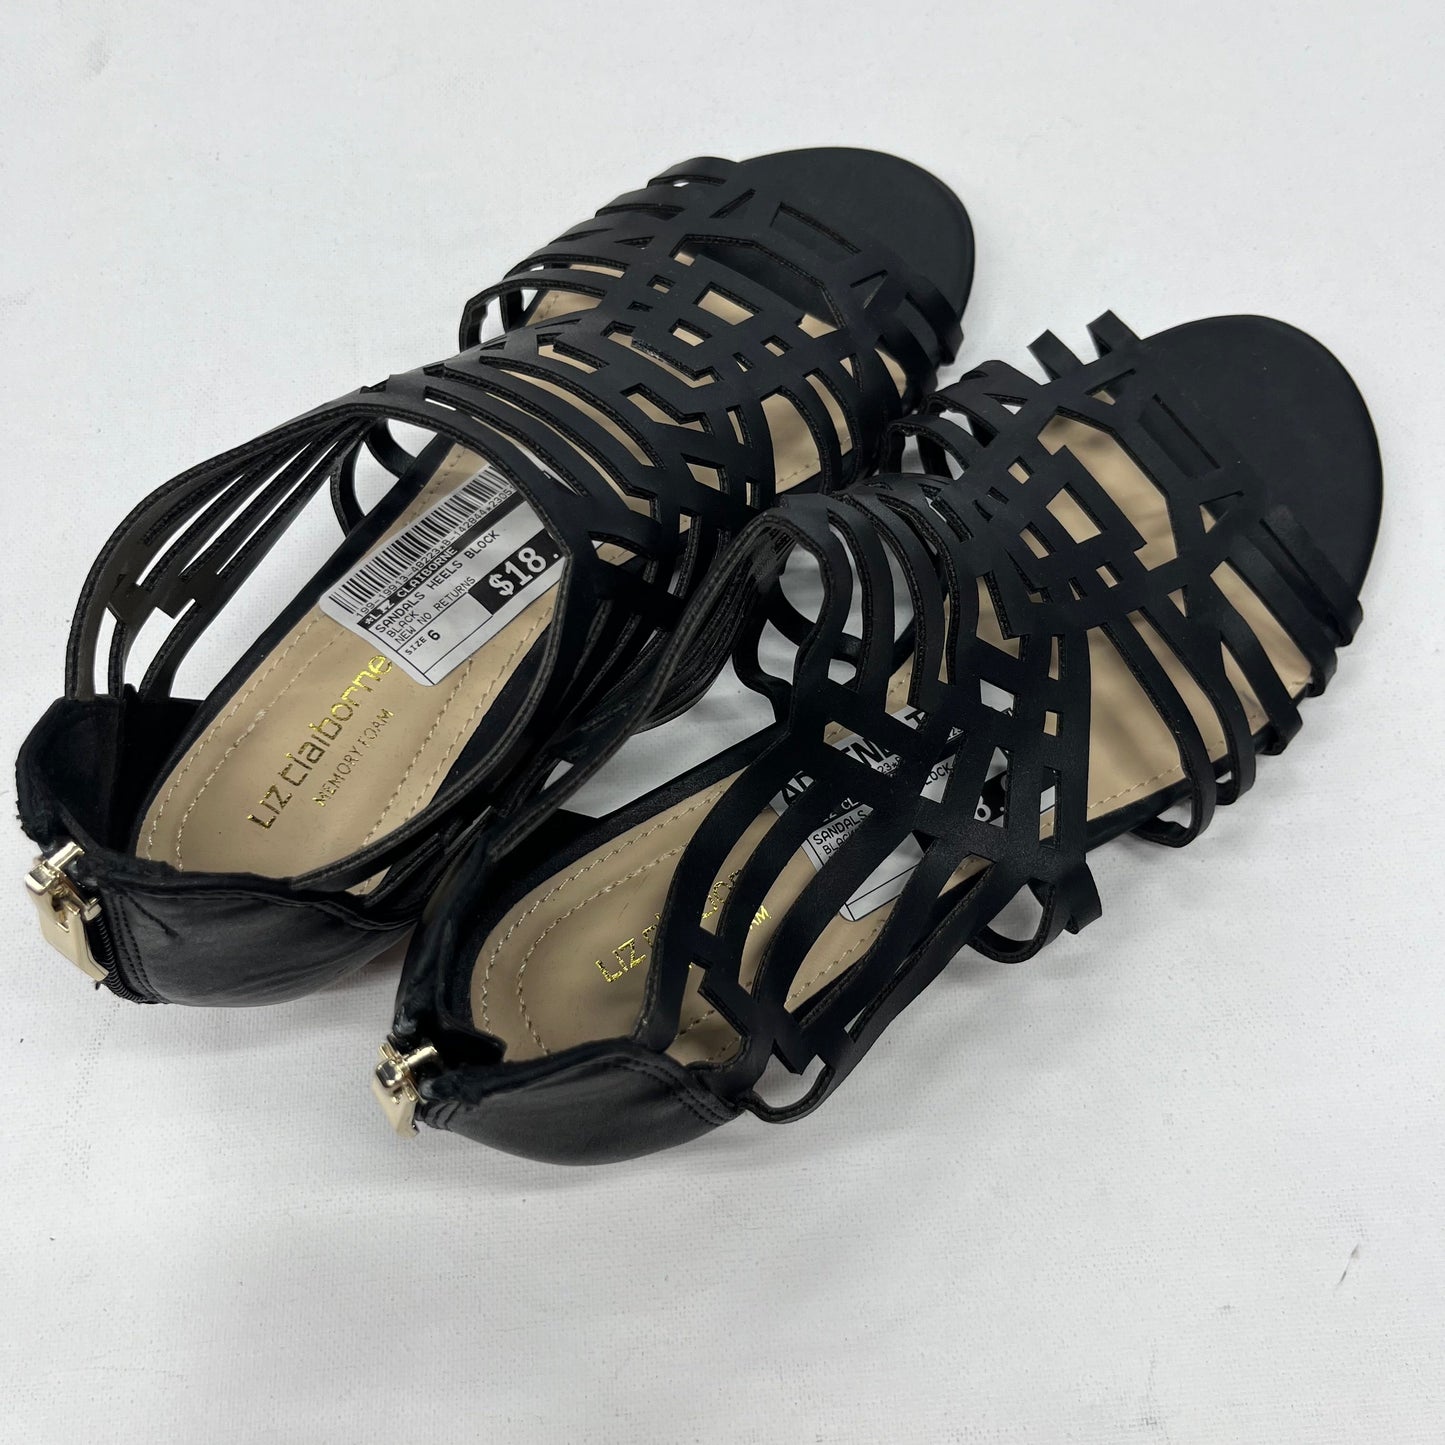 Sandals Heels Block By Liz Claiborne  Size: 6